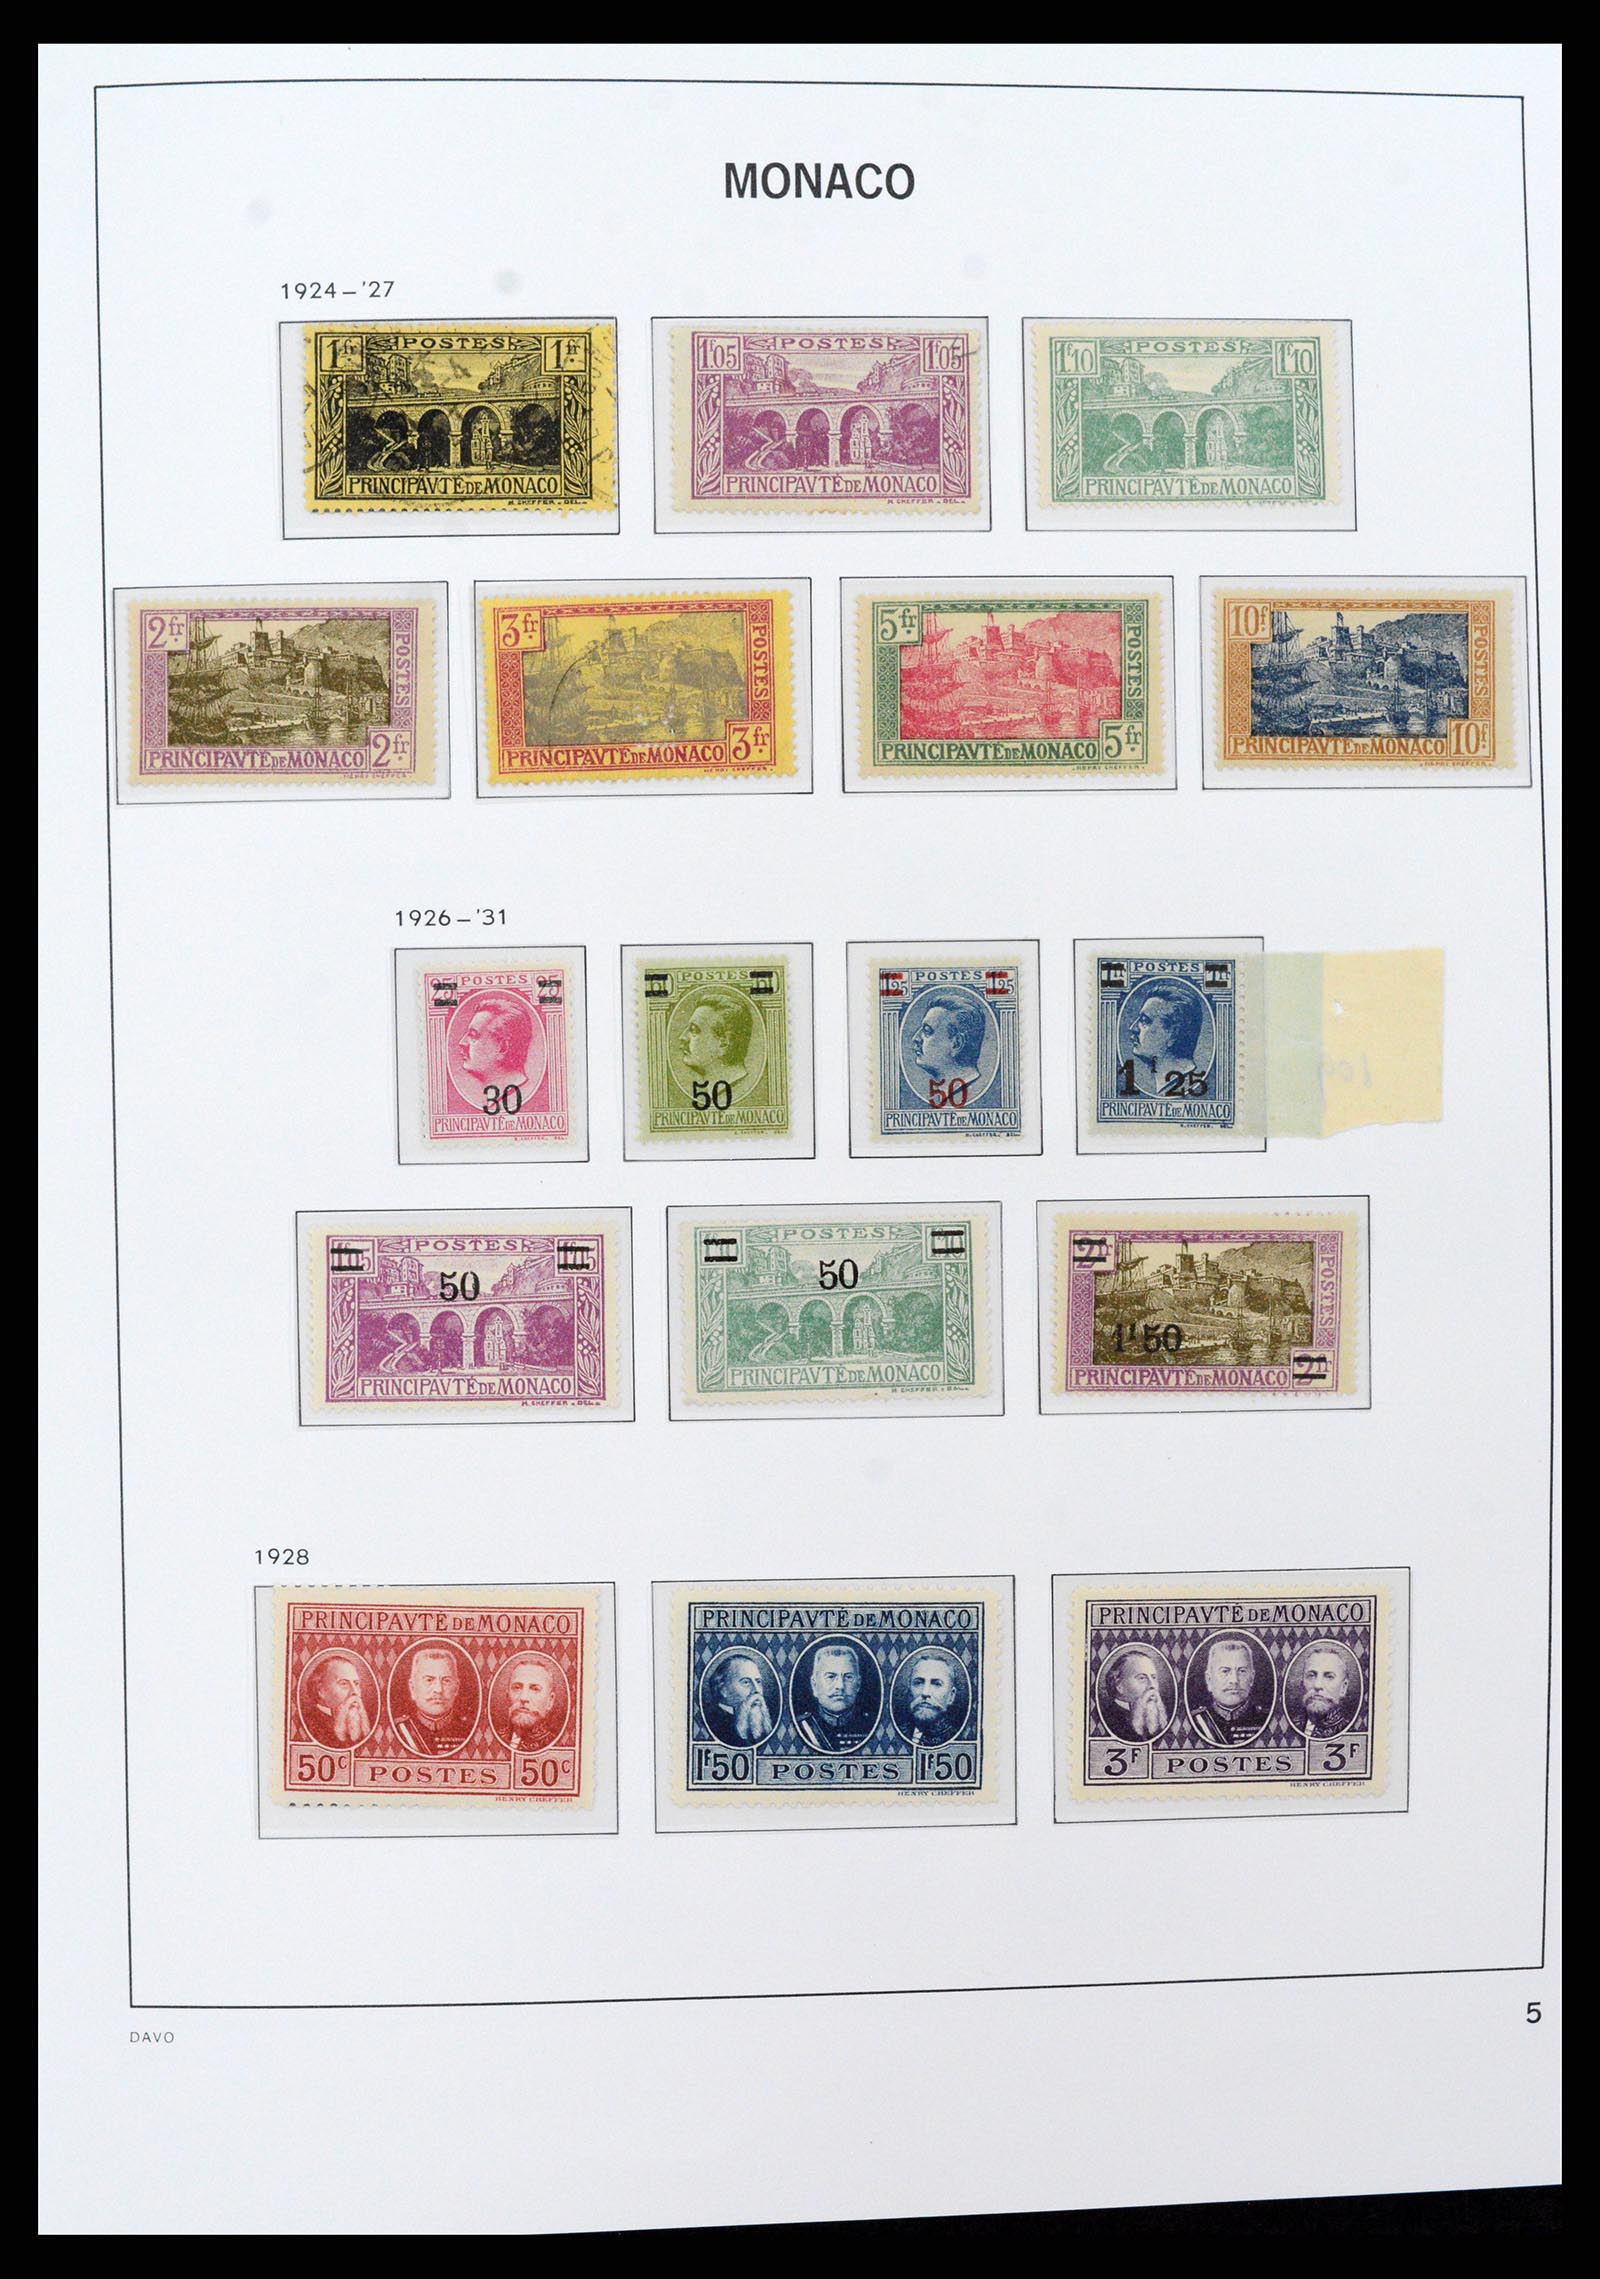 37279 005 - Stamp collection 37279 Monaco 1885-1969.